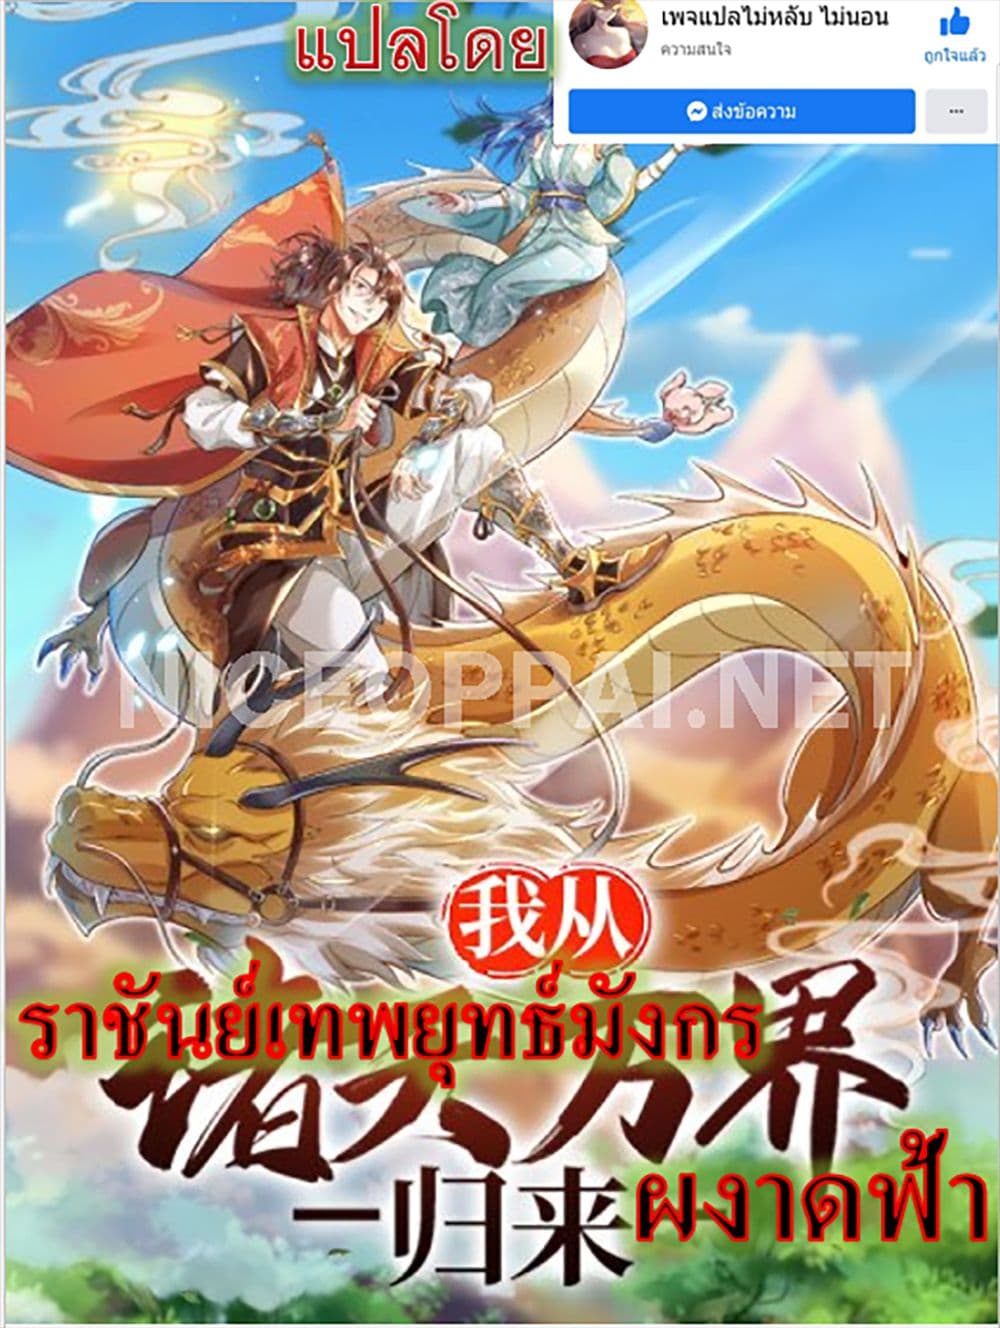 Royal God of War, Rising Dragon ราชันย์เทพยุทธ์มังกรผงาดฟ้า - 60 - 1